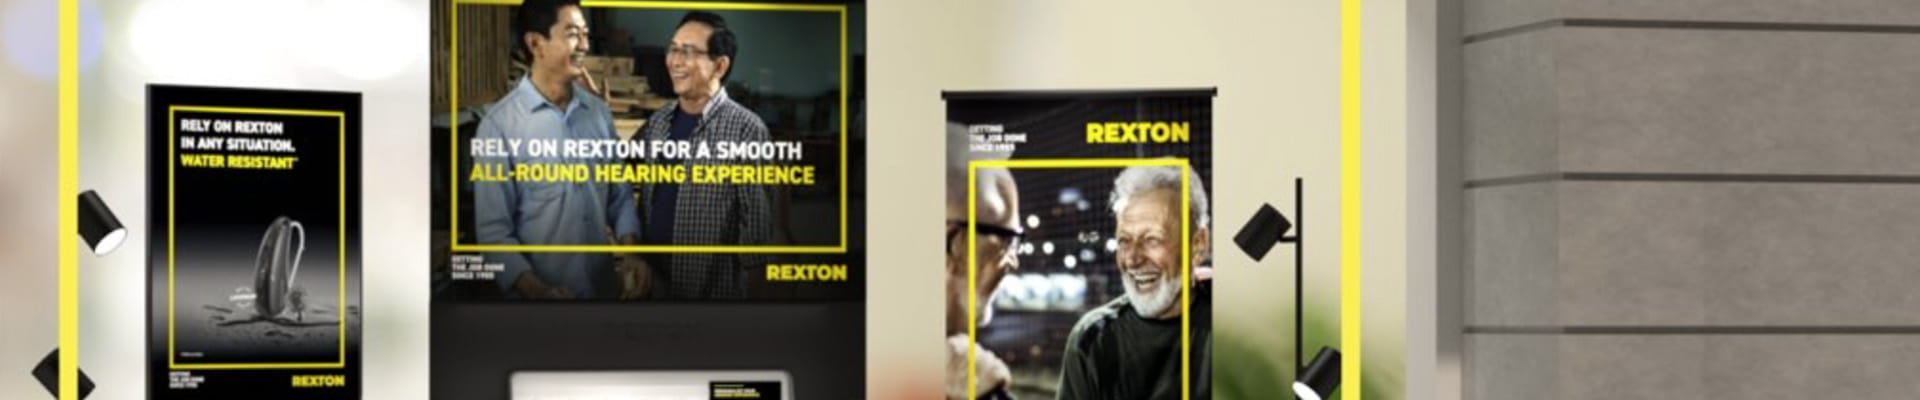 Rexton hearing aid store window